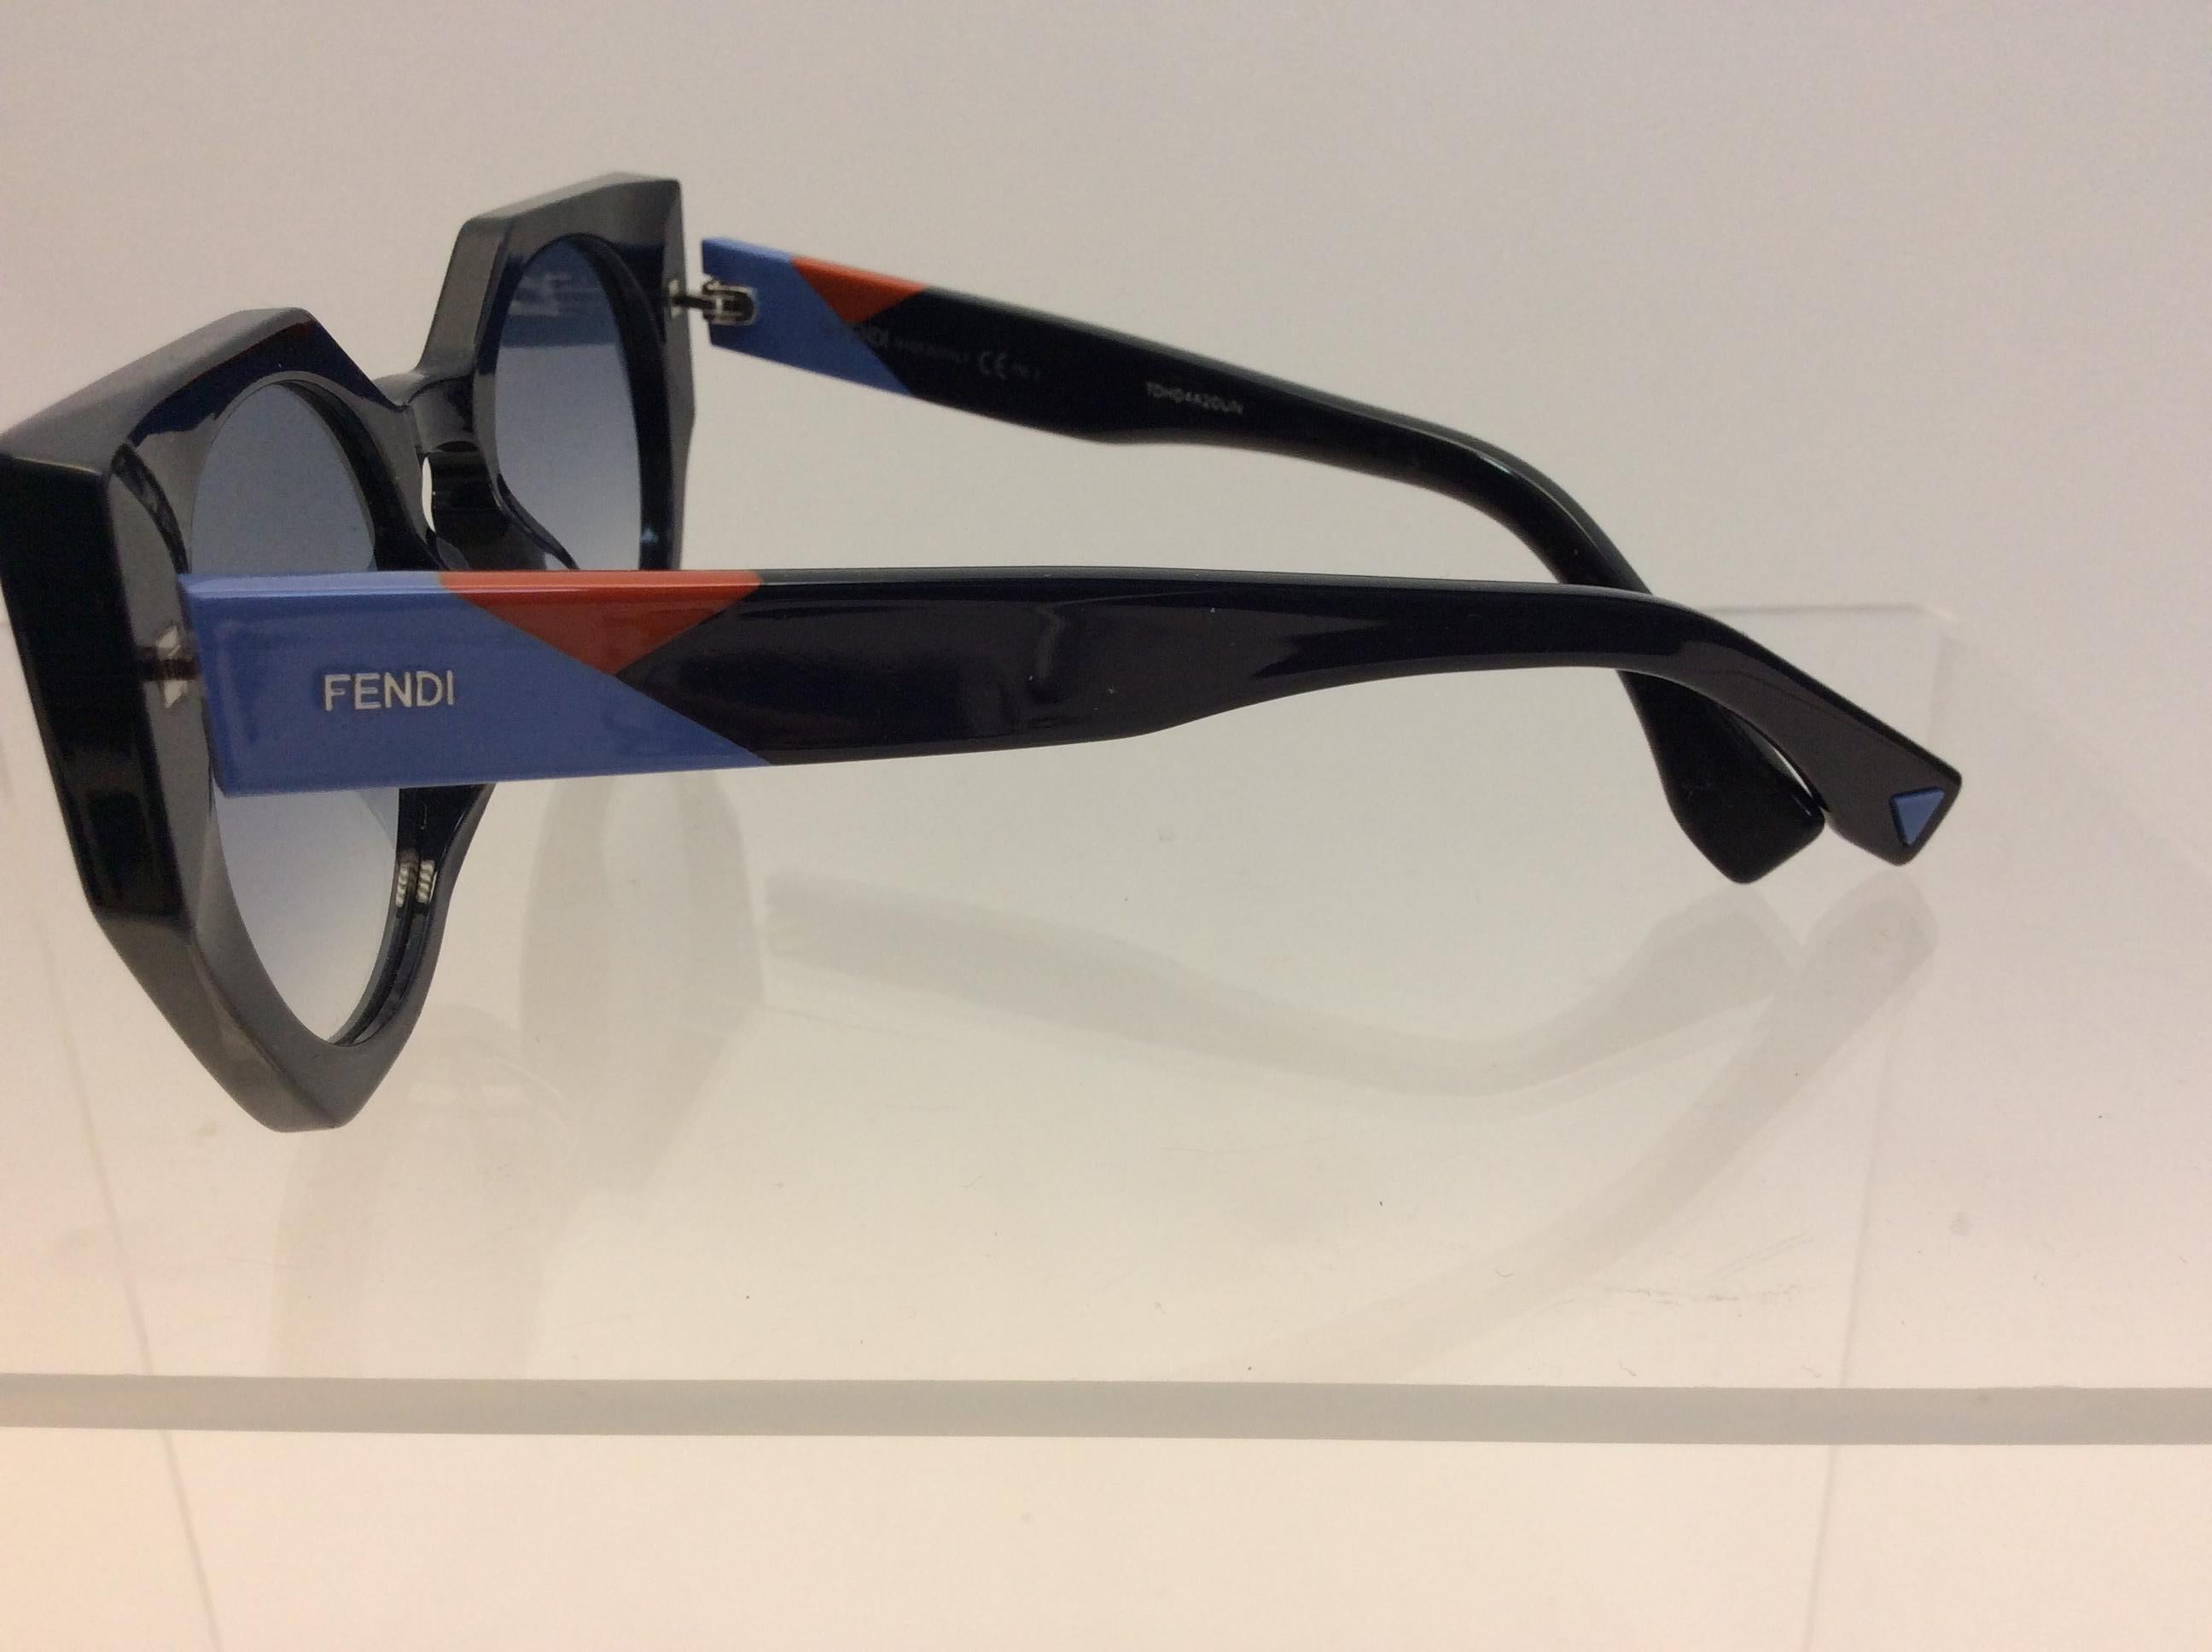 Fendi Navy Blue Sunglasses
$165
Made in Italy
Across 5.5